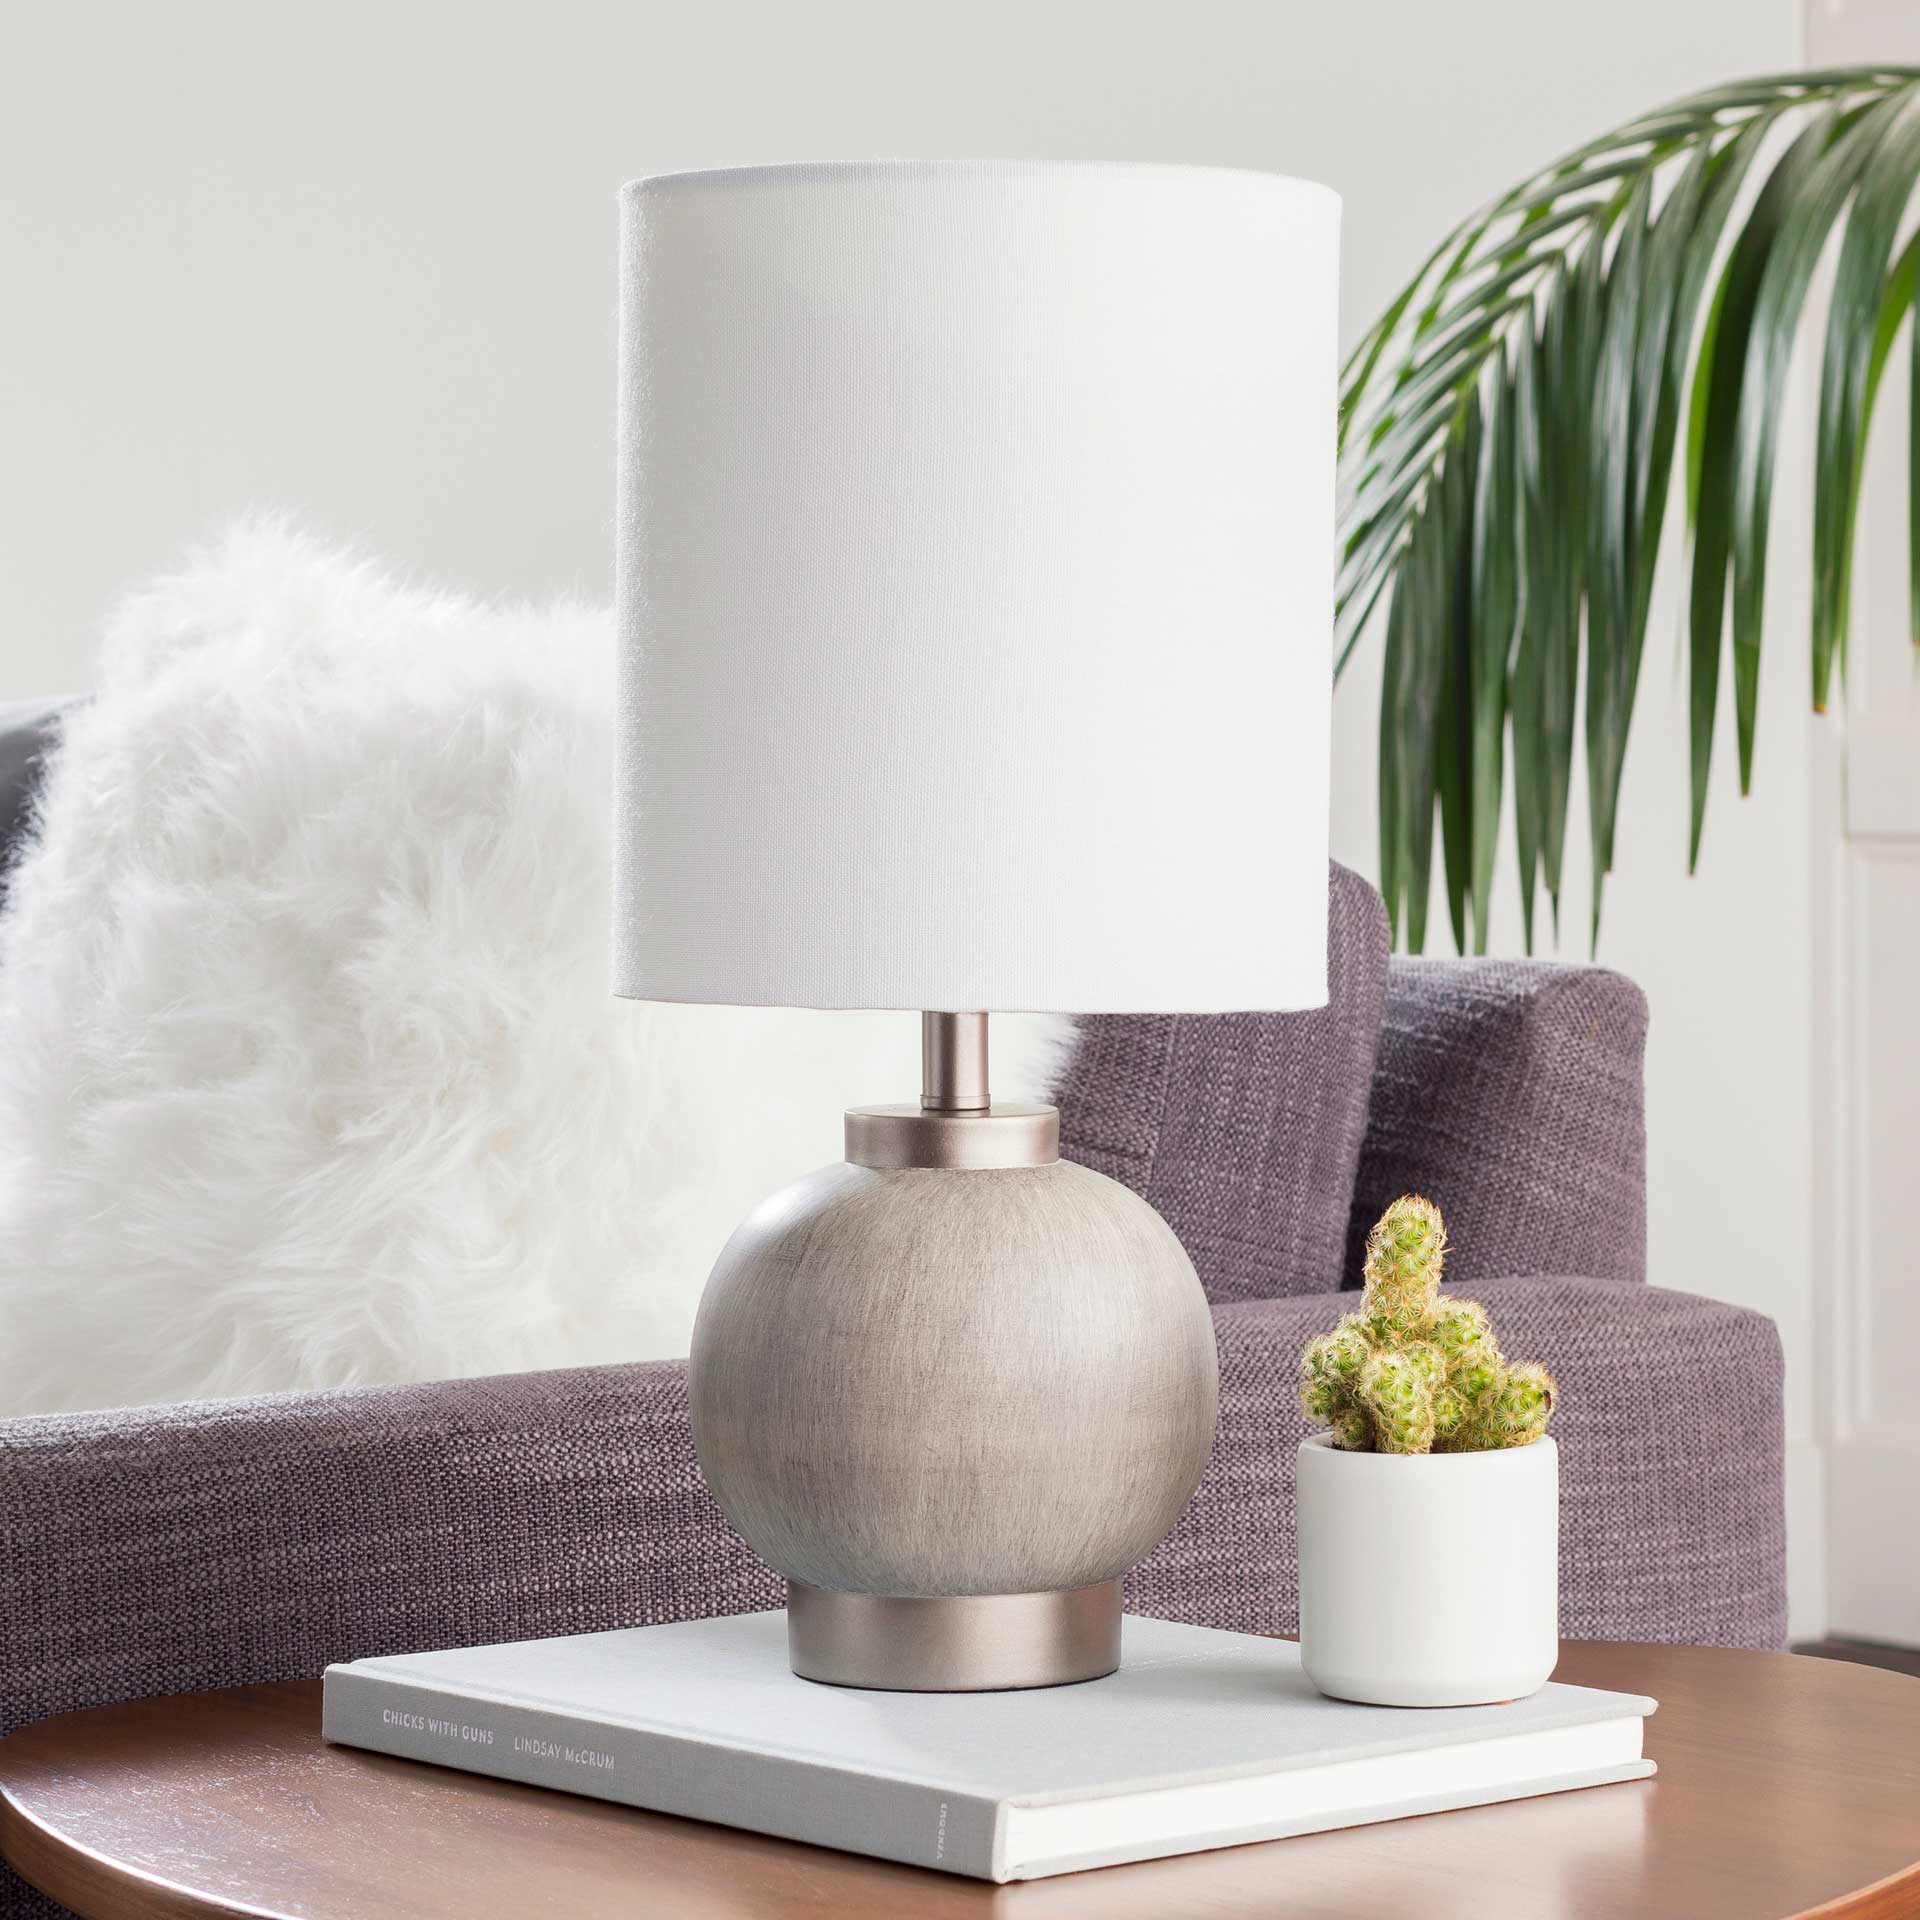 Denver Table Lamp Charcoal/White/Gray